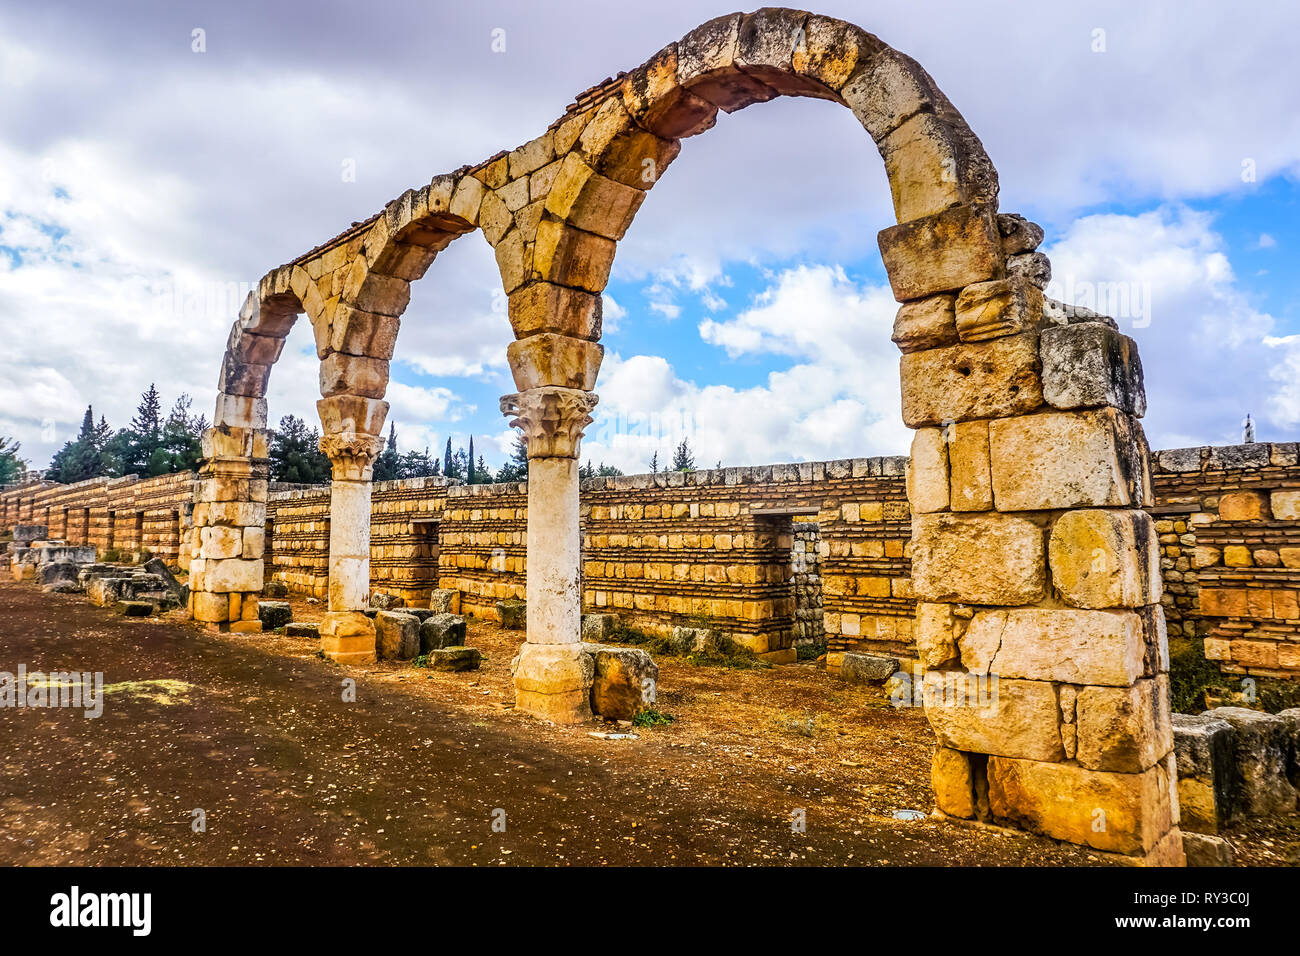 Anjar Citadel Historical Landmark Arched Bows on Pillars Stock Photo